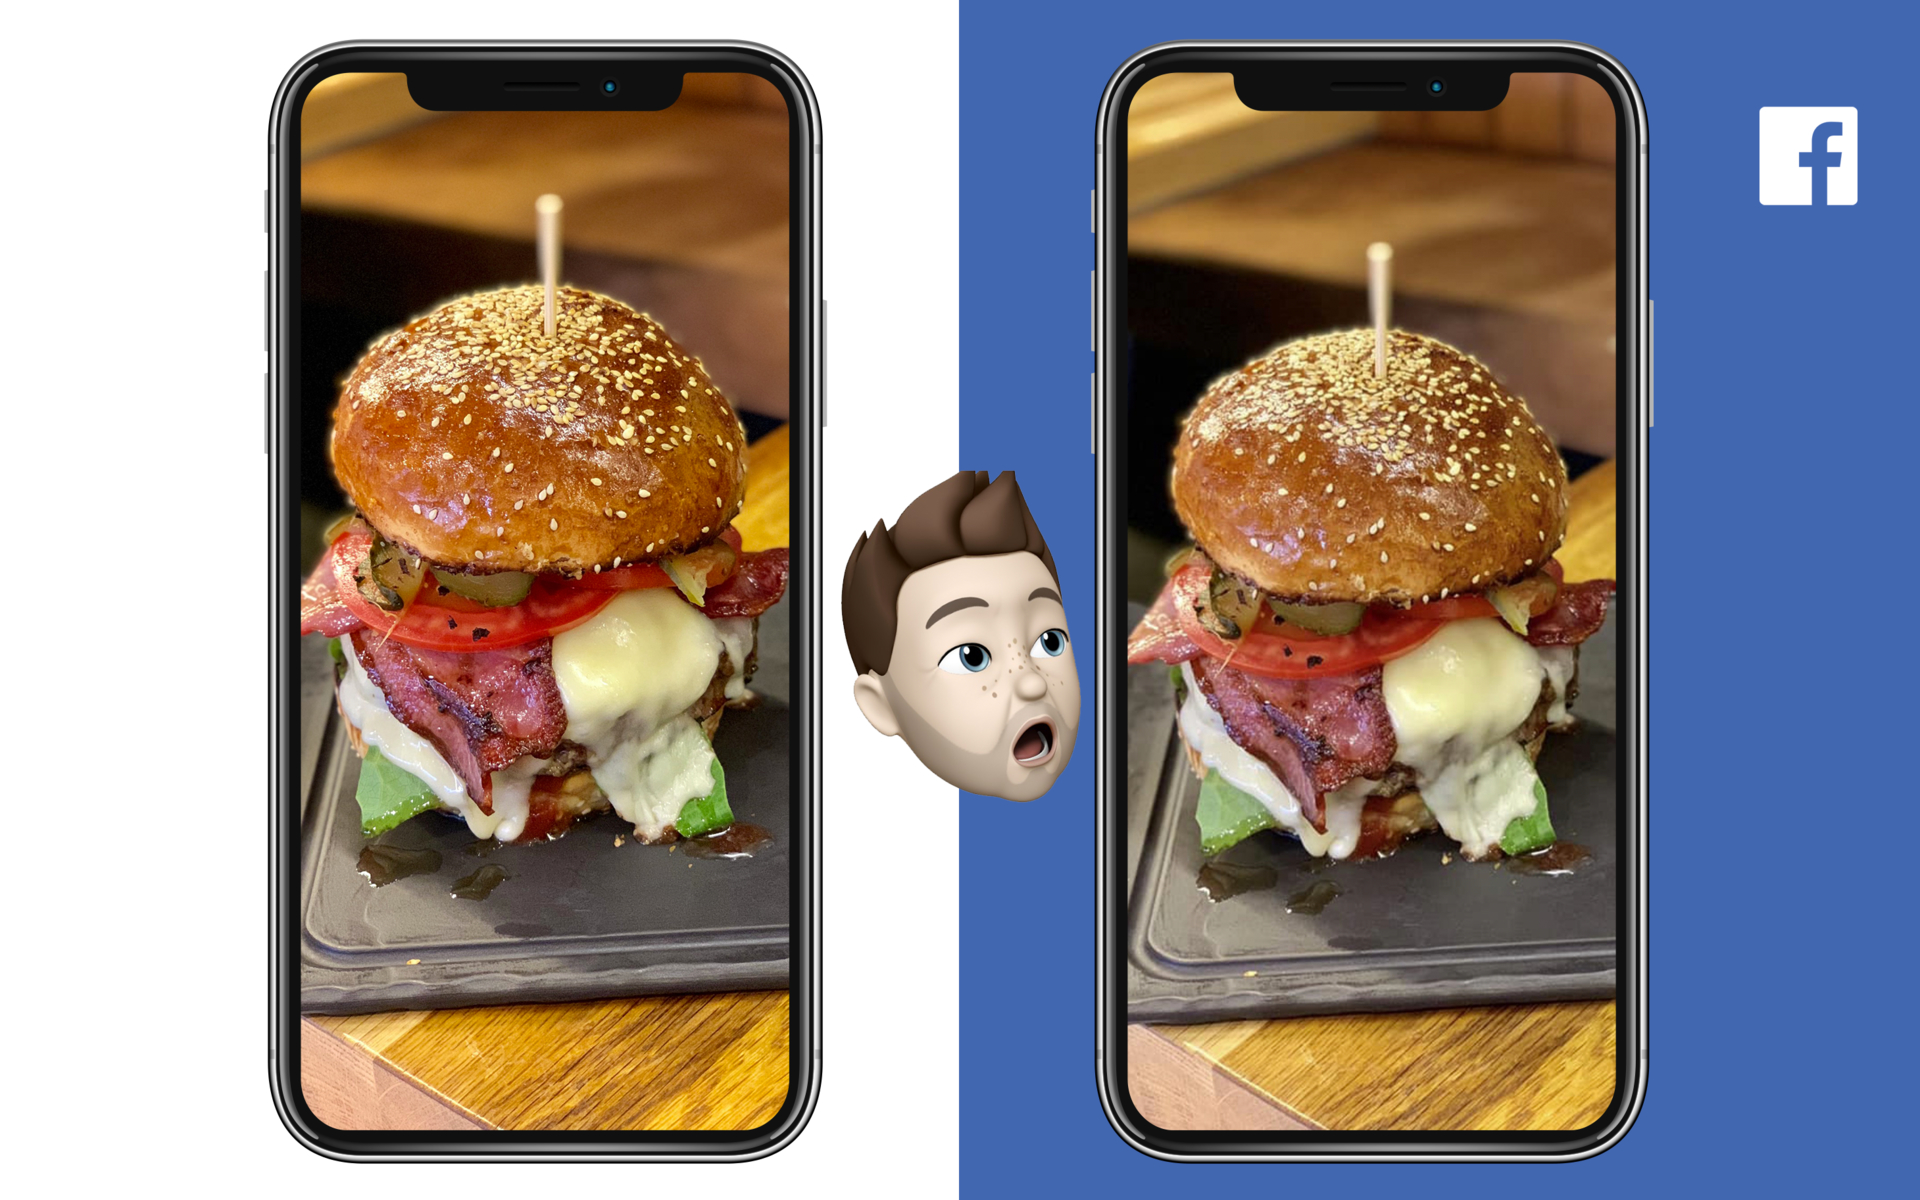 iphonexs facebook burger comparison